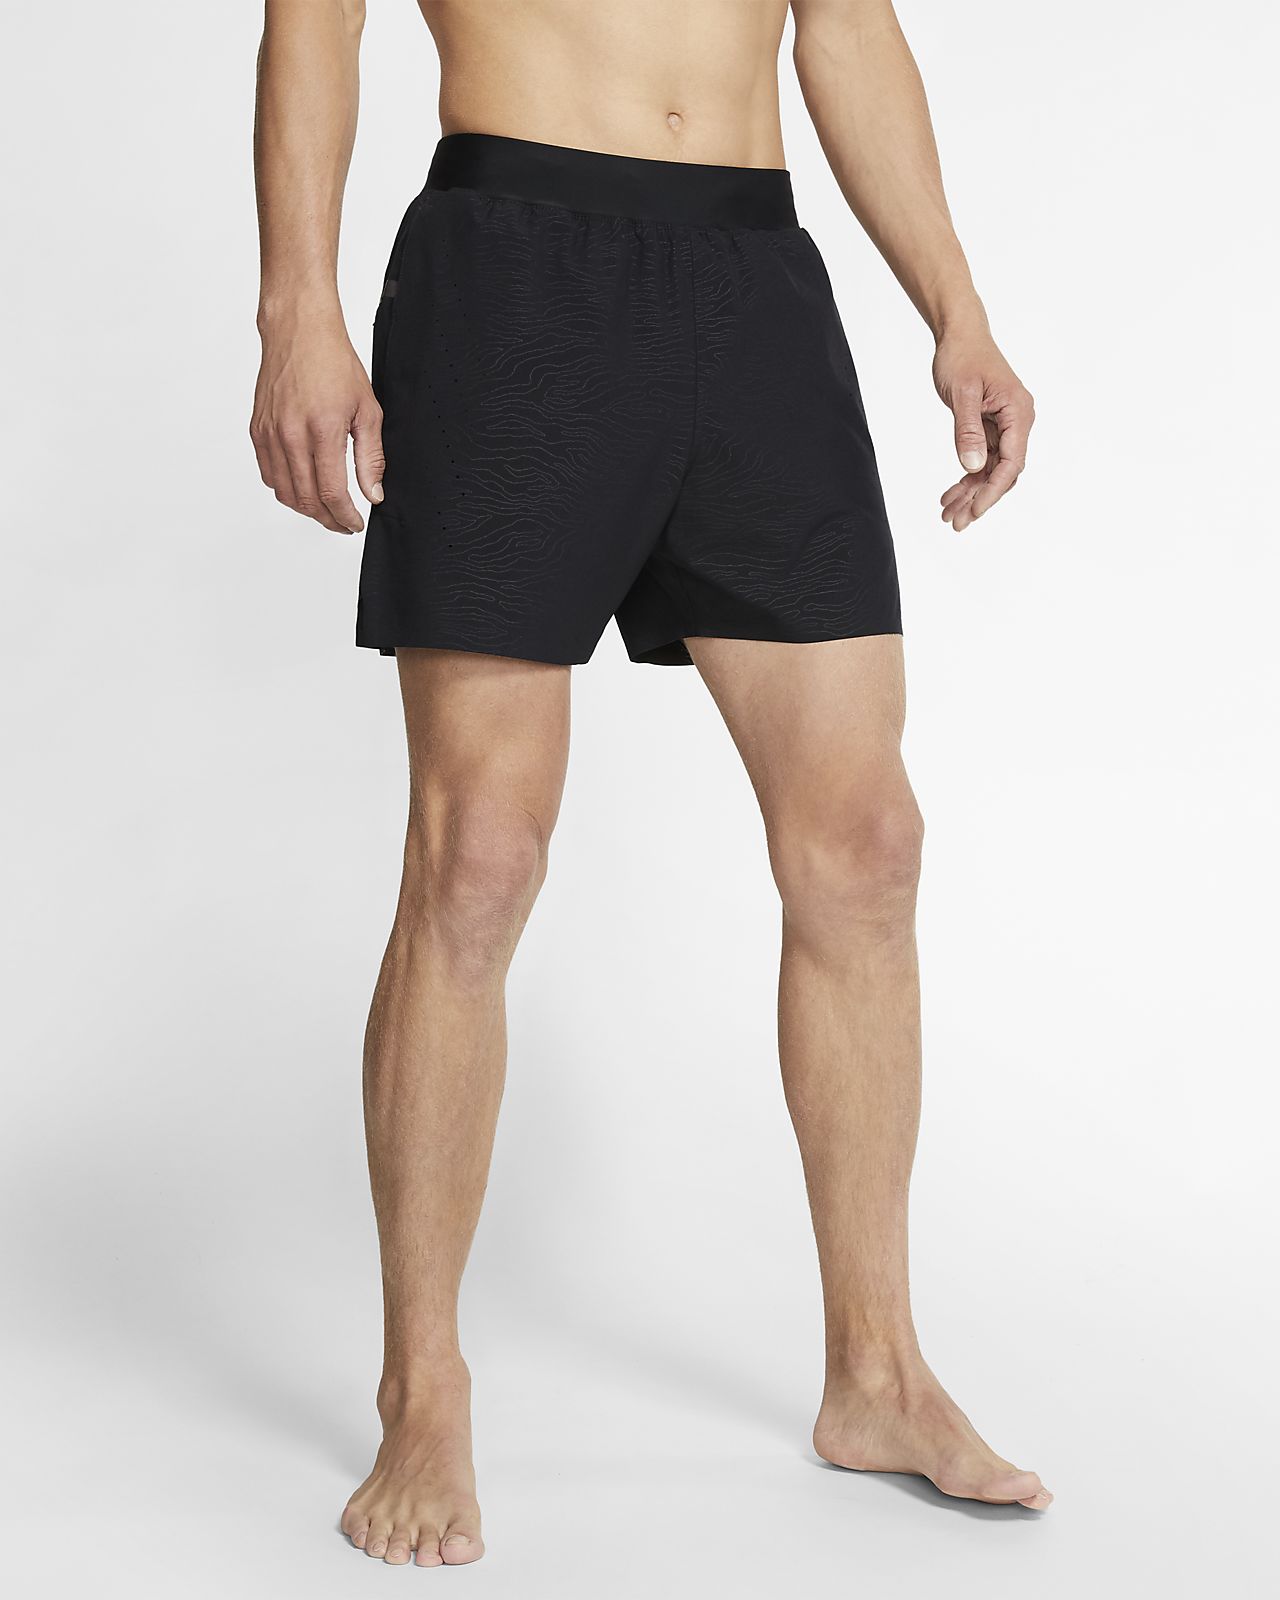 nike volleyball shorts mens